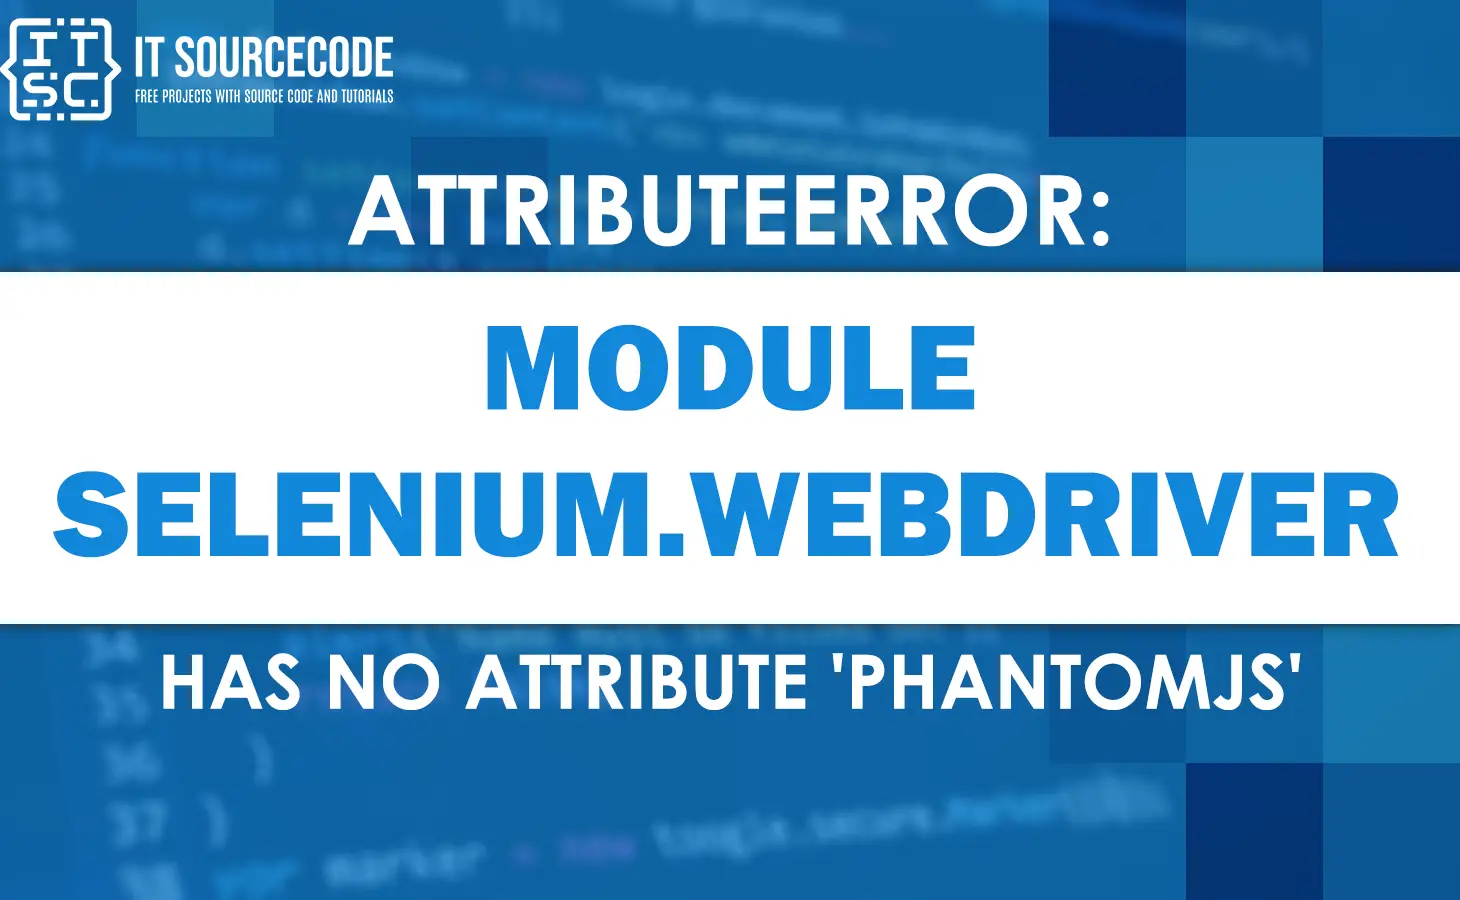 Attributeerror: module selenium.webdriver has no attribute phantomjs